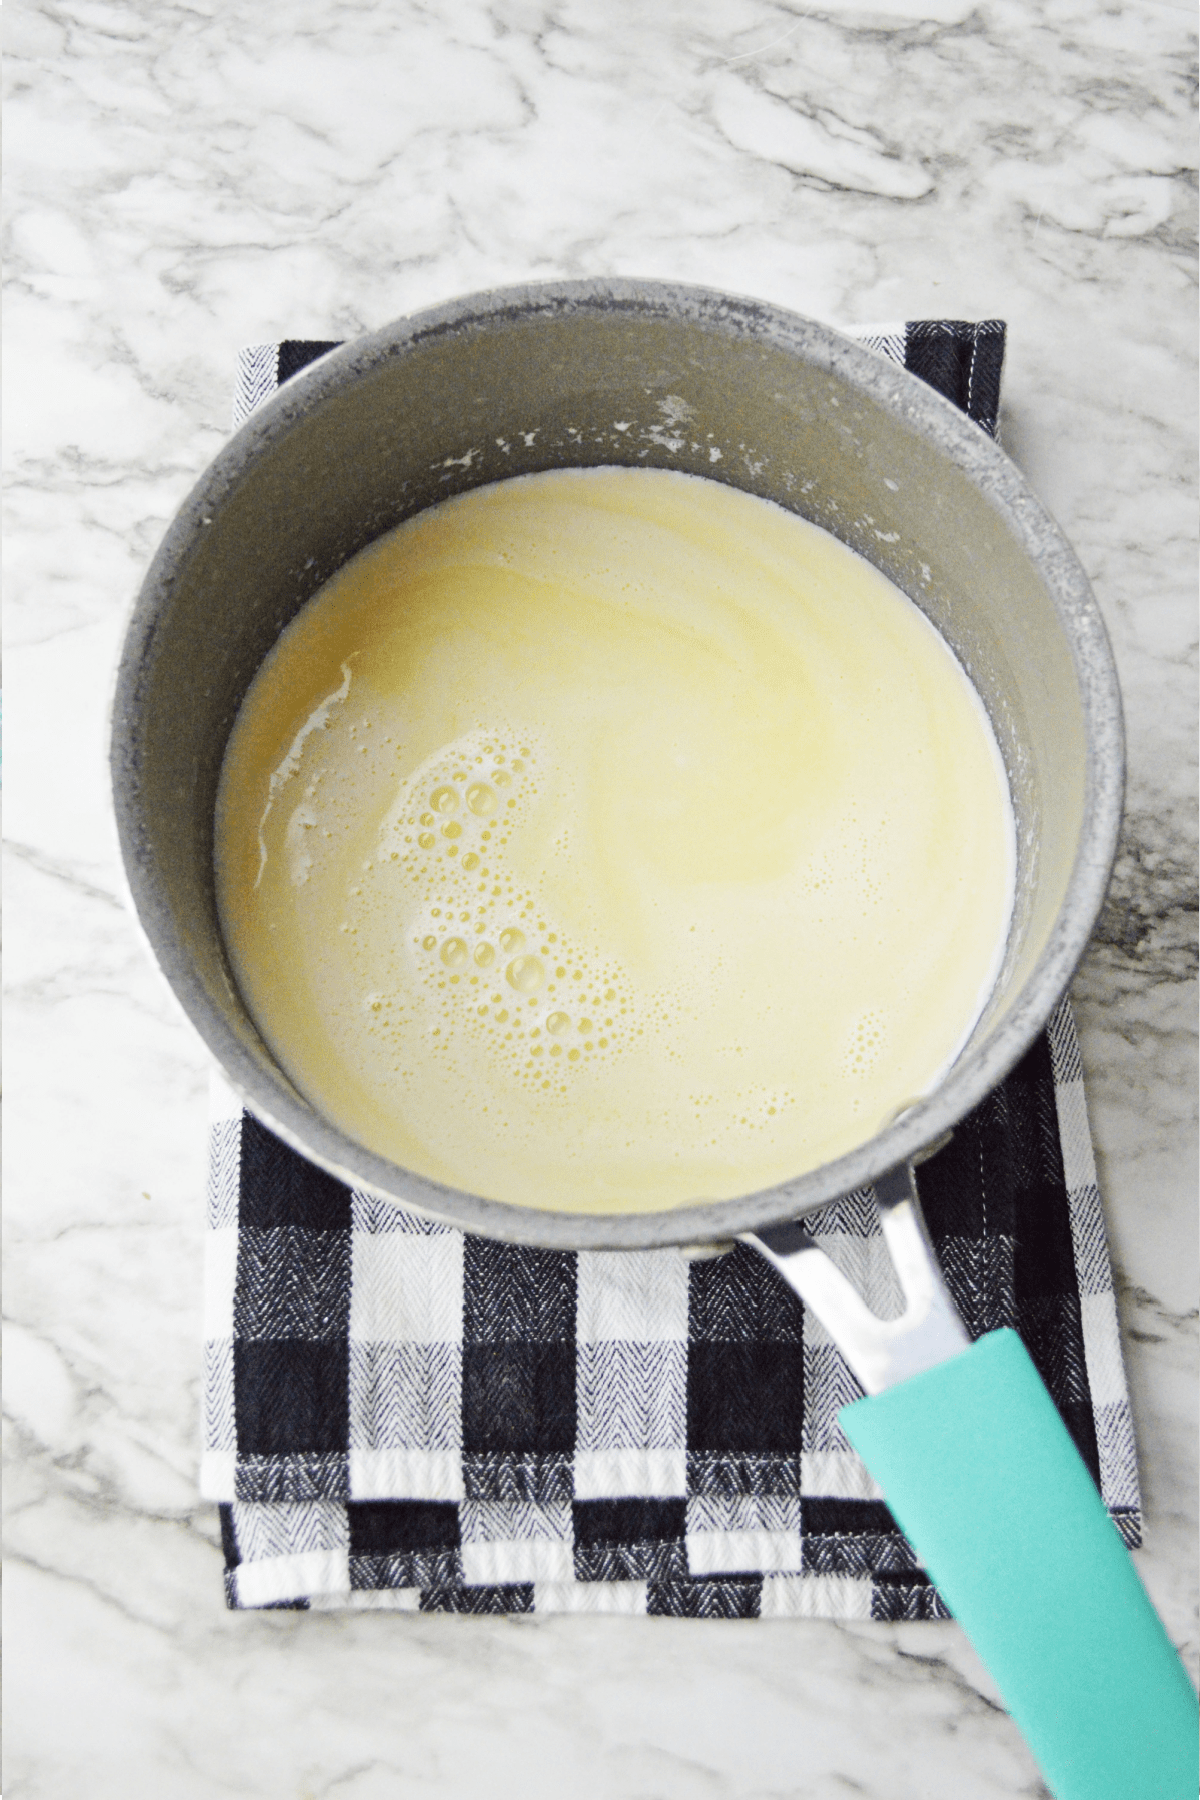 Butter and milk mixture in saucepan